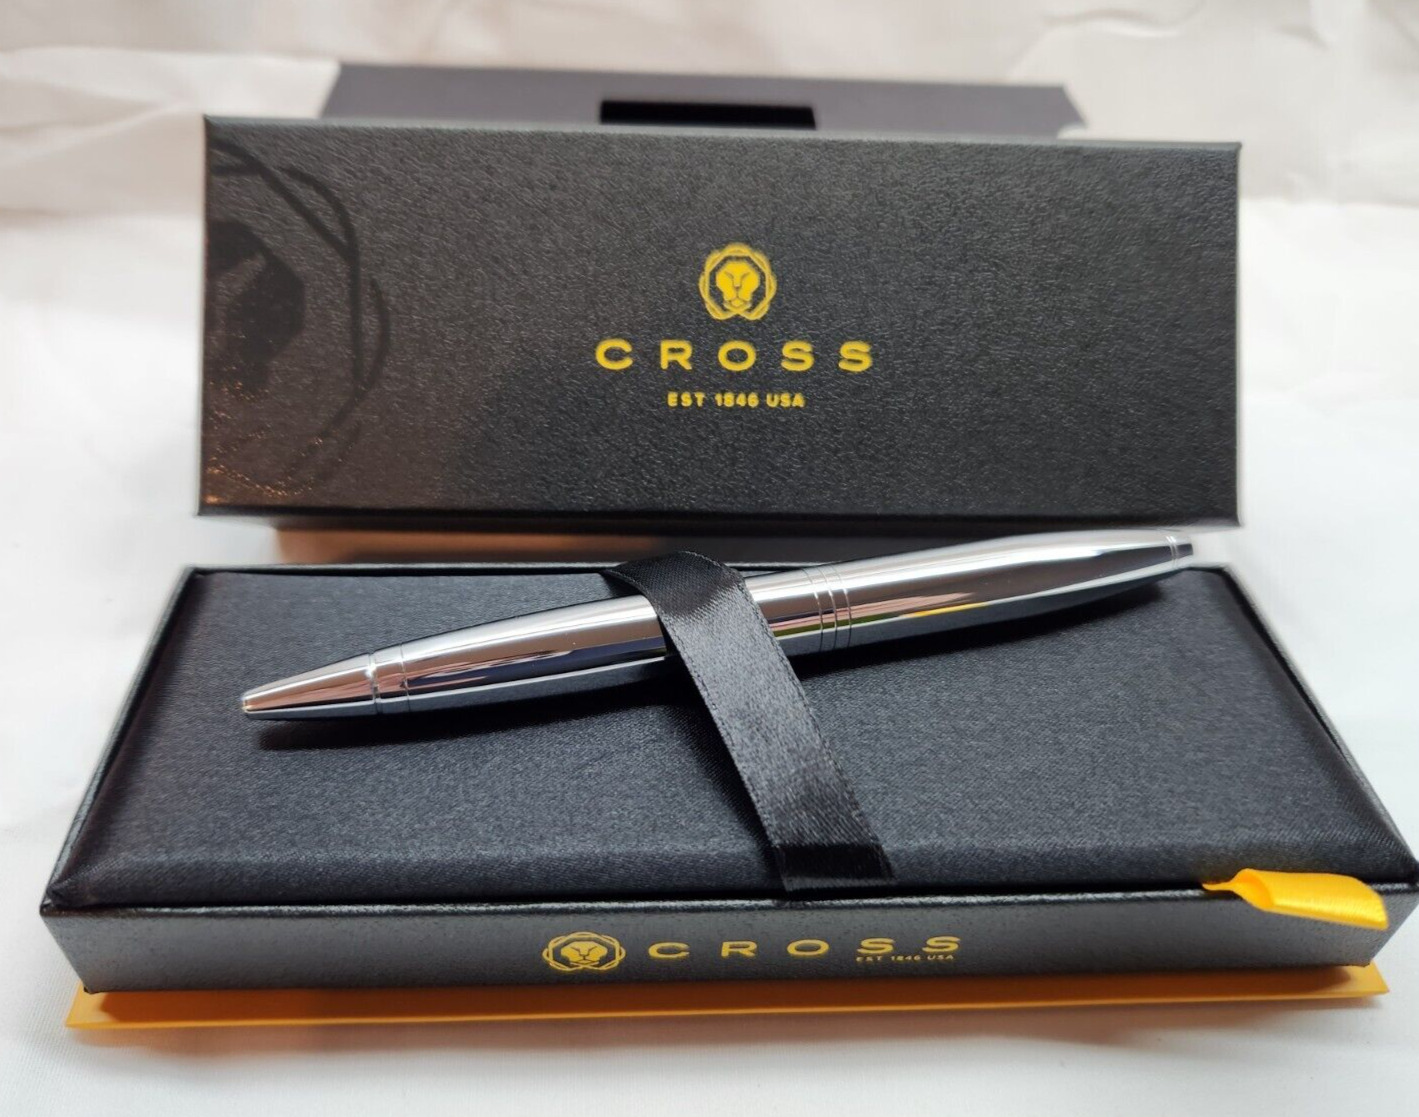 Set of 20 Cross Chrome Ballpoint Pen - Calais AT0112-1 - NEW IN BOX